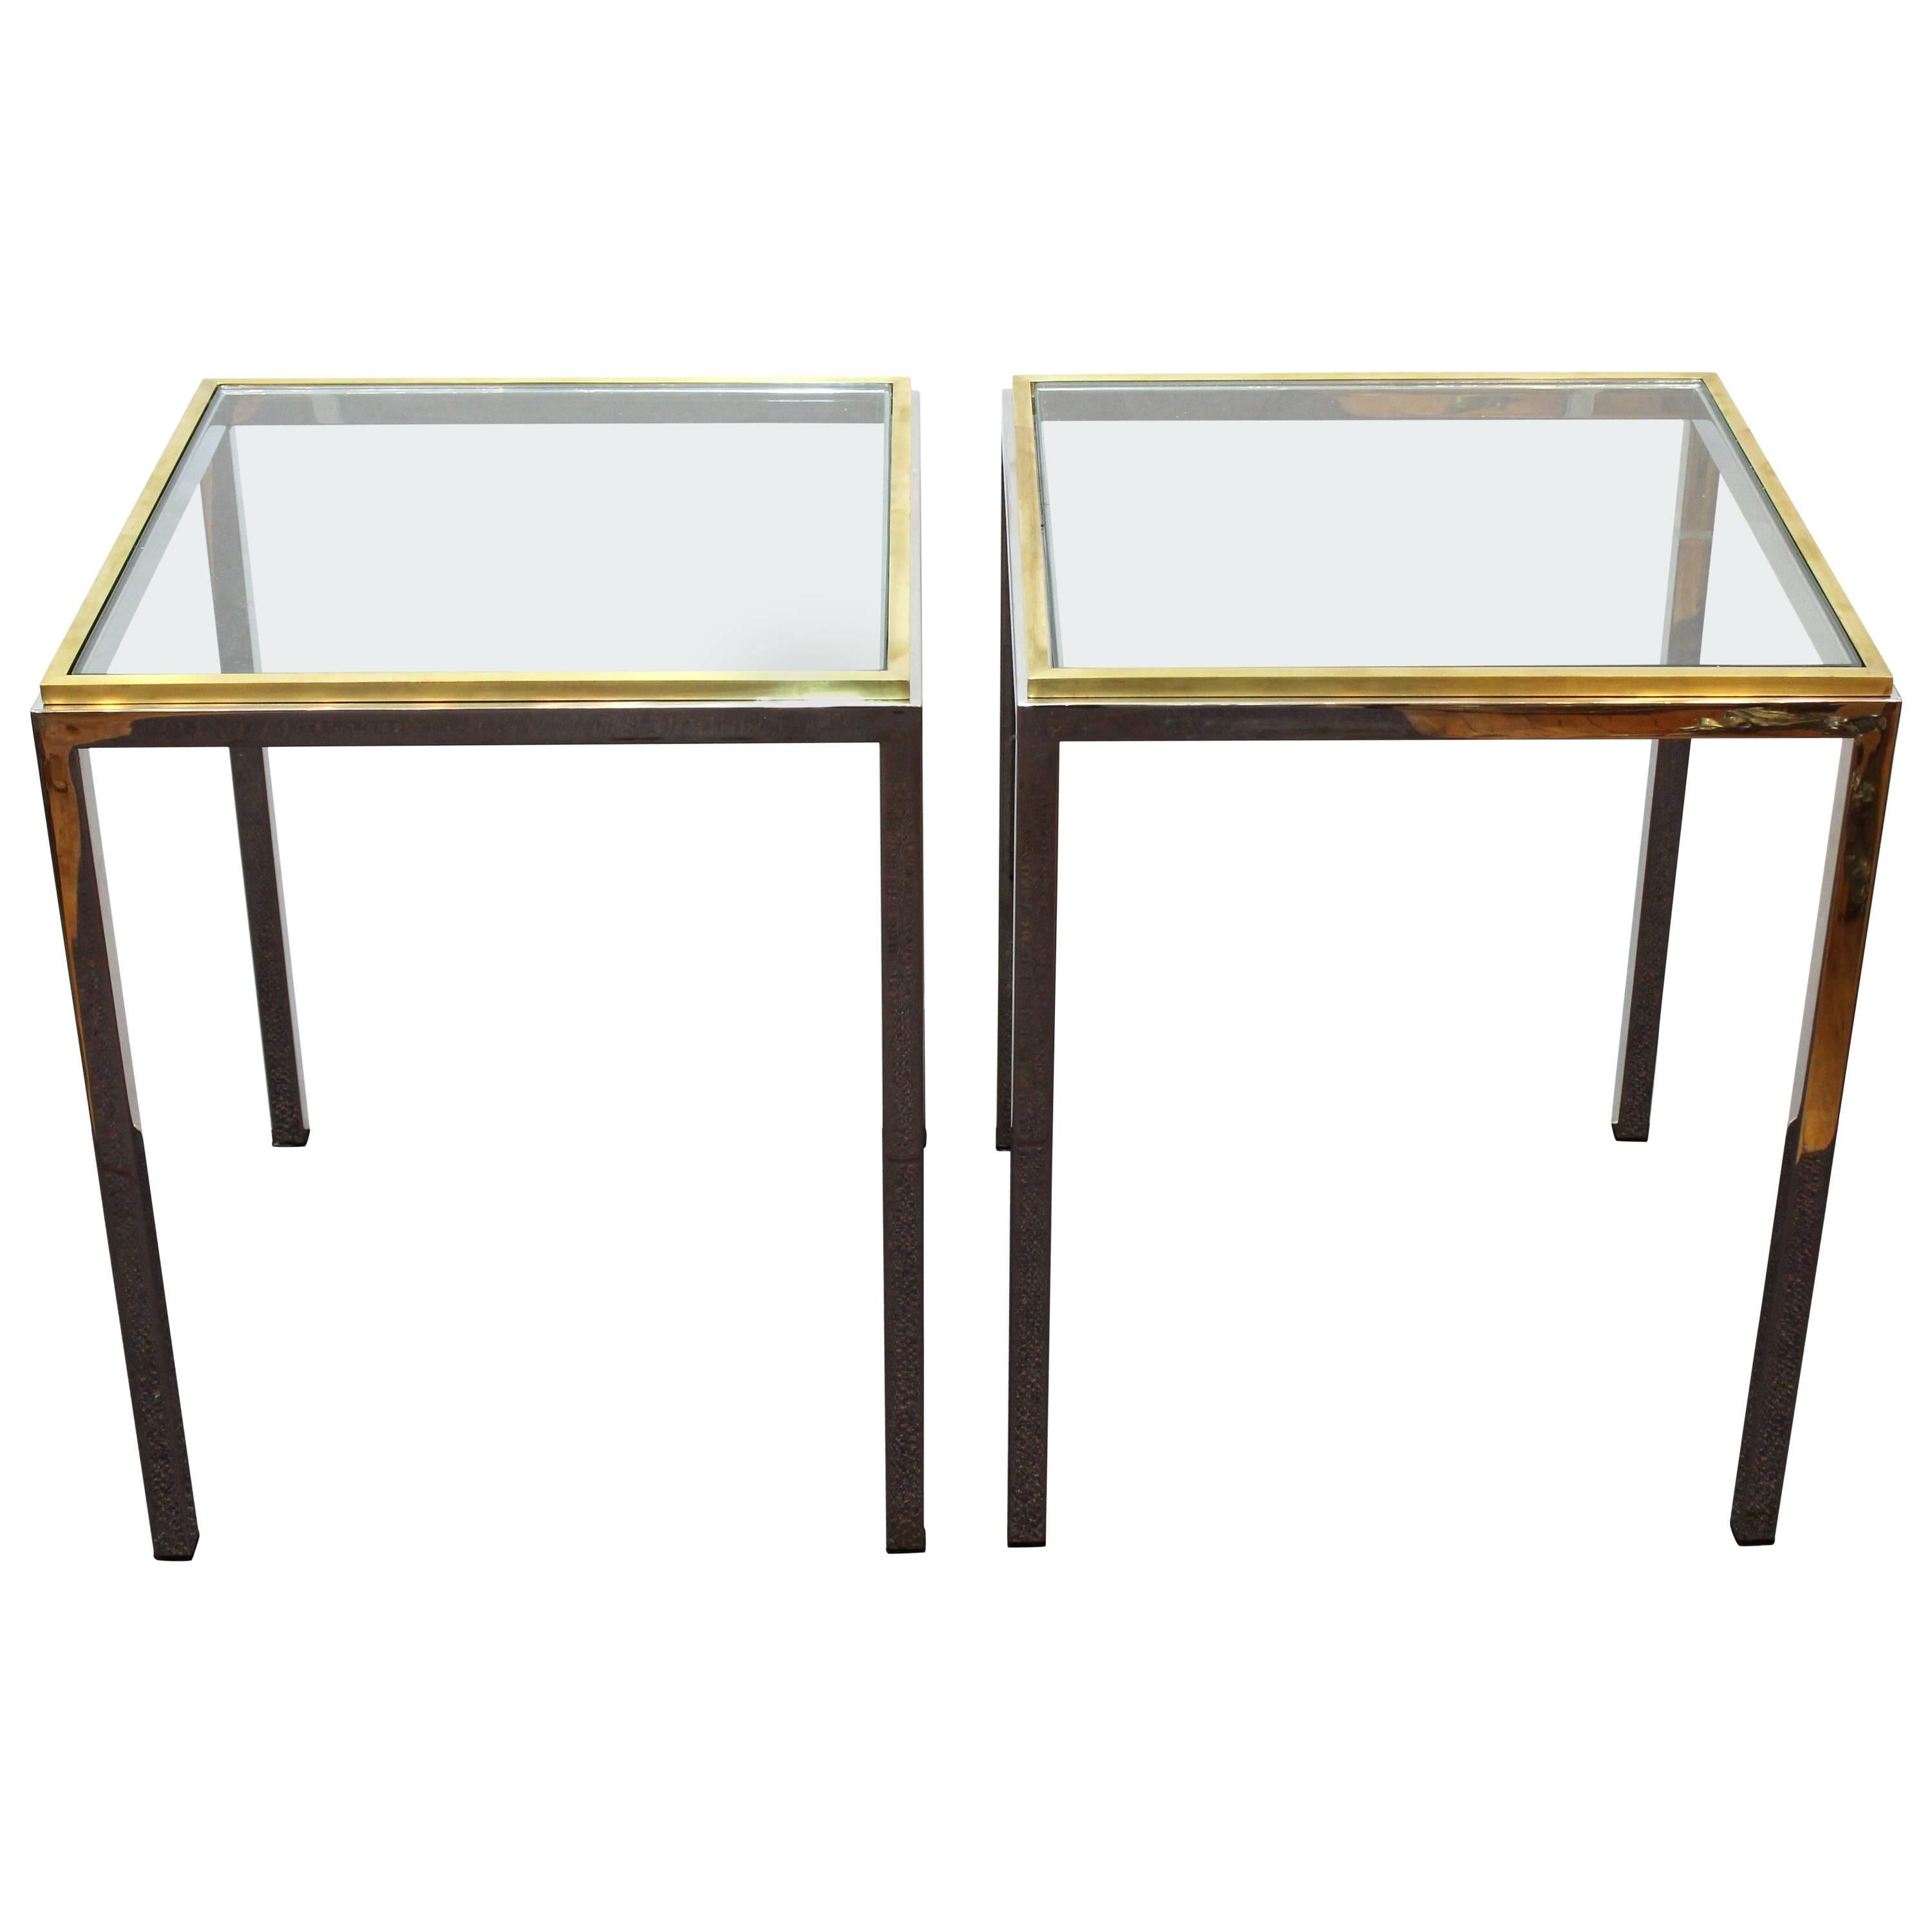 Pair of Chrome Side Tables Attributed to Romeo Rega or Renato Zevi